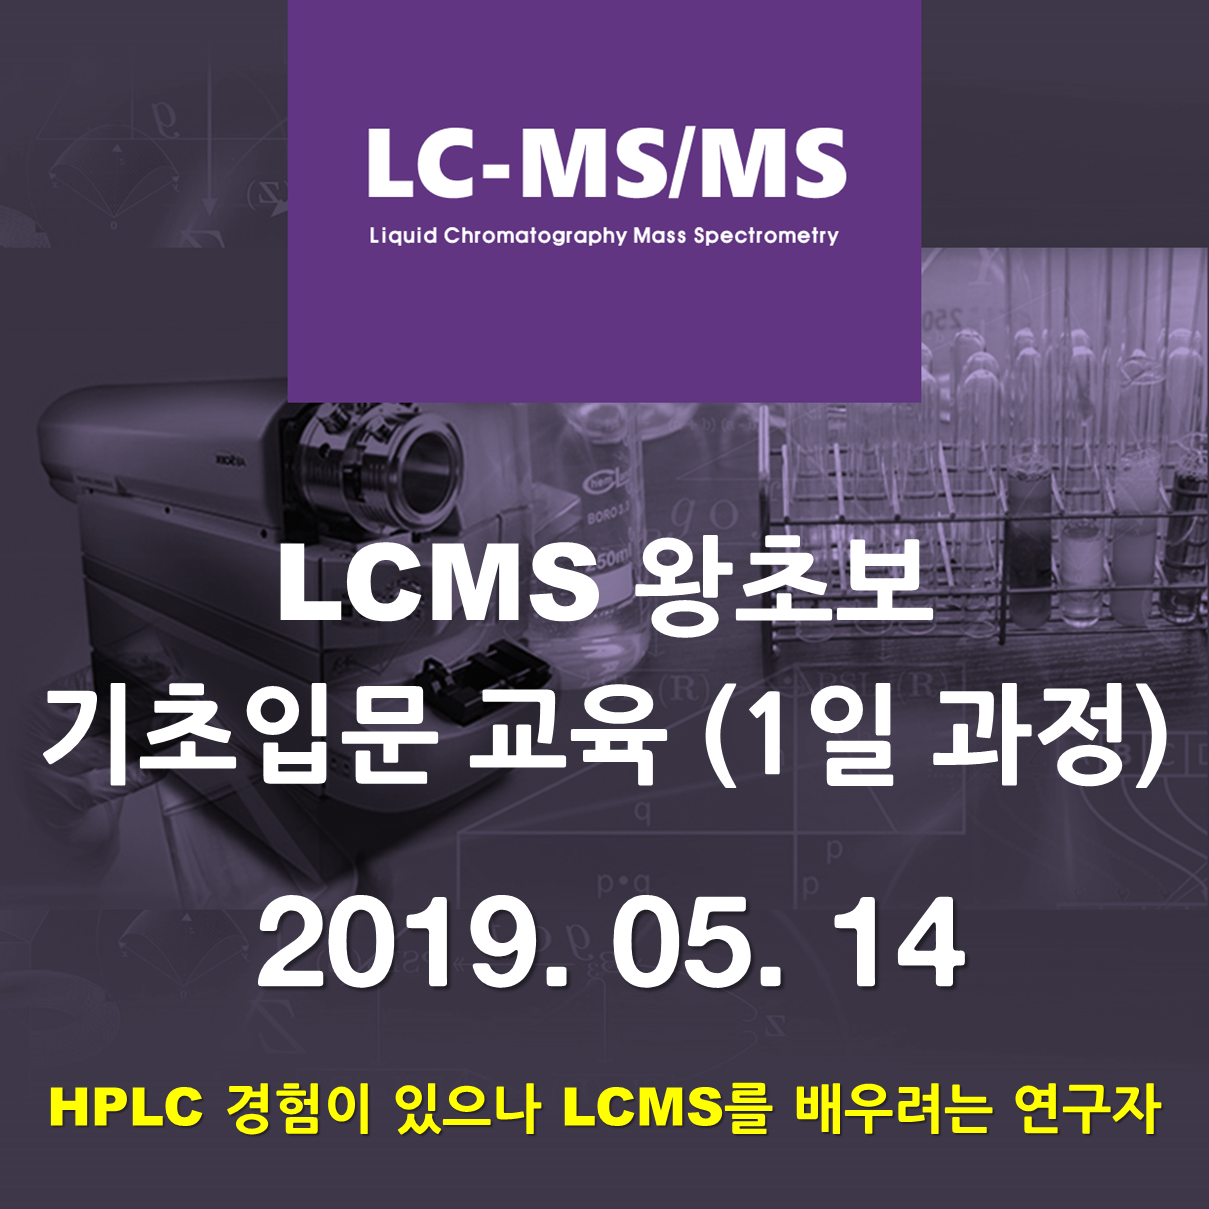 LC-MS/MS 왕초보 기초입문 교육-1일과정